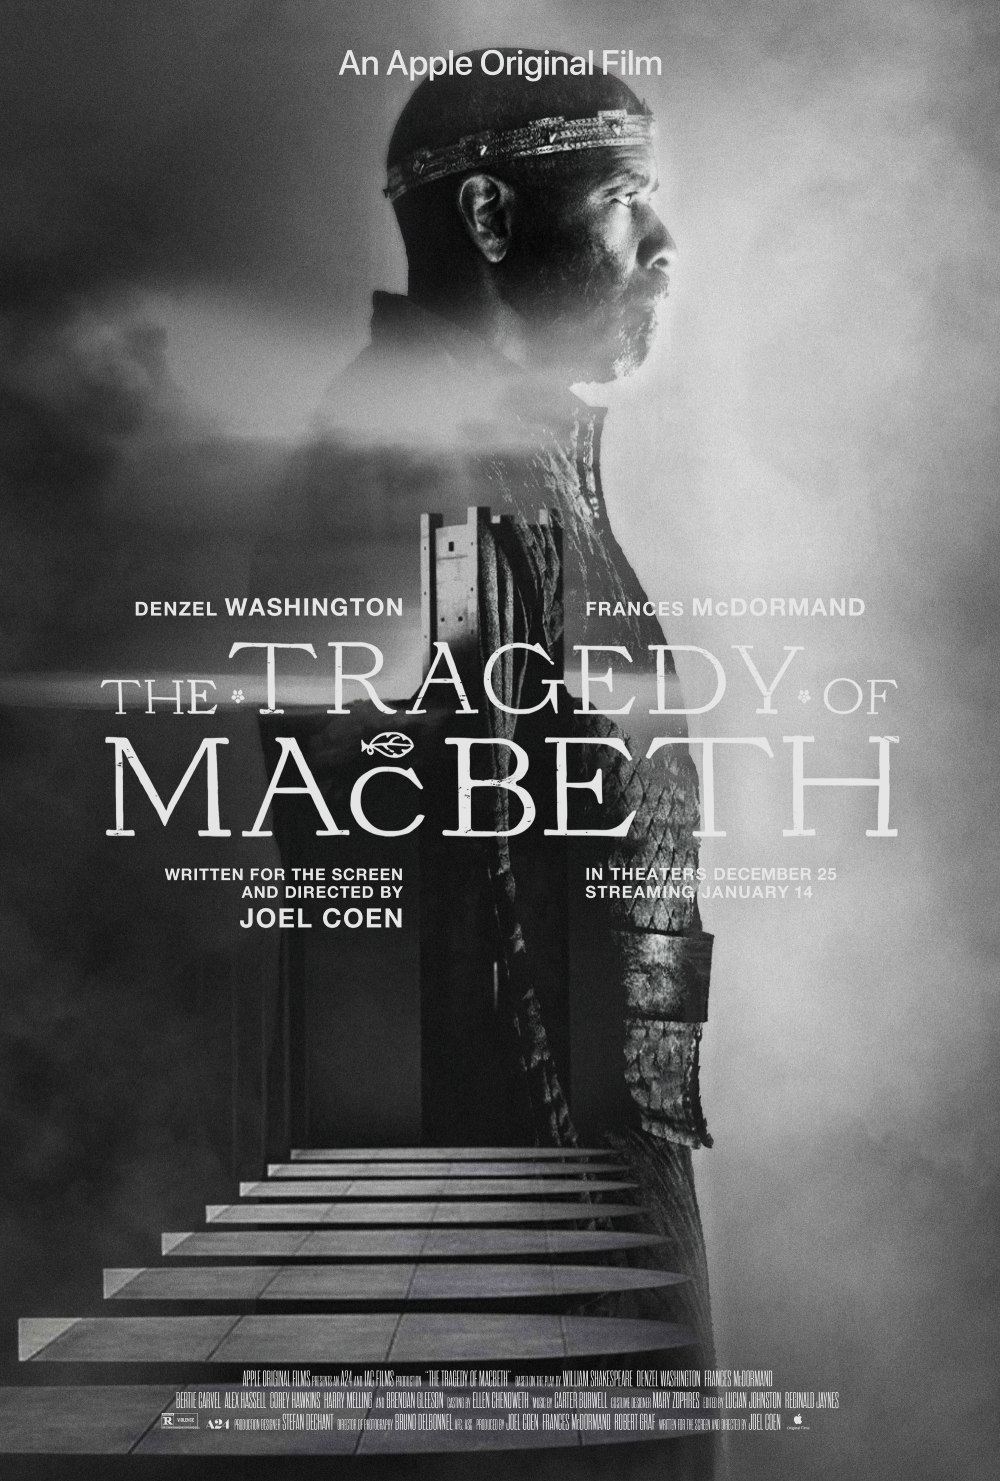 Macbeth tragédiája